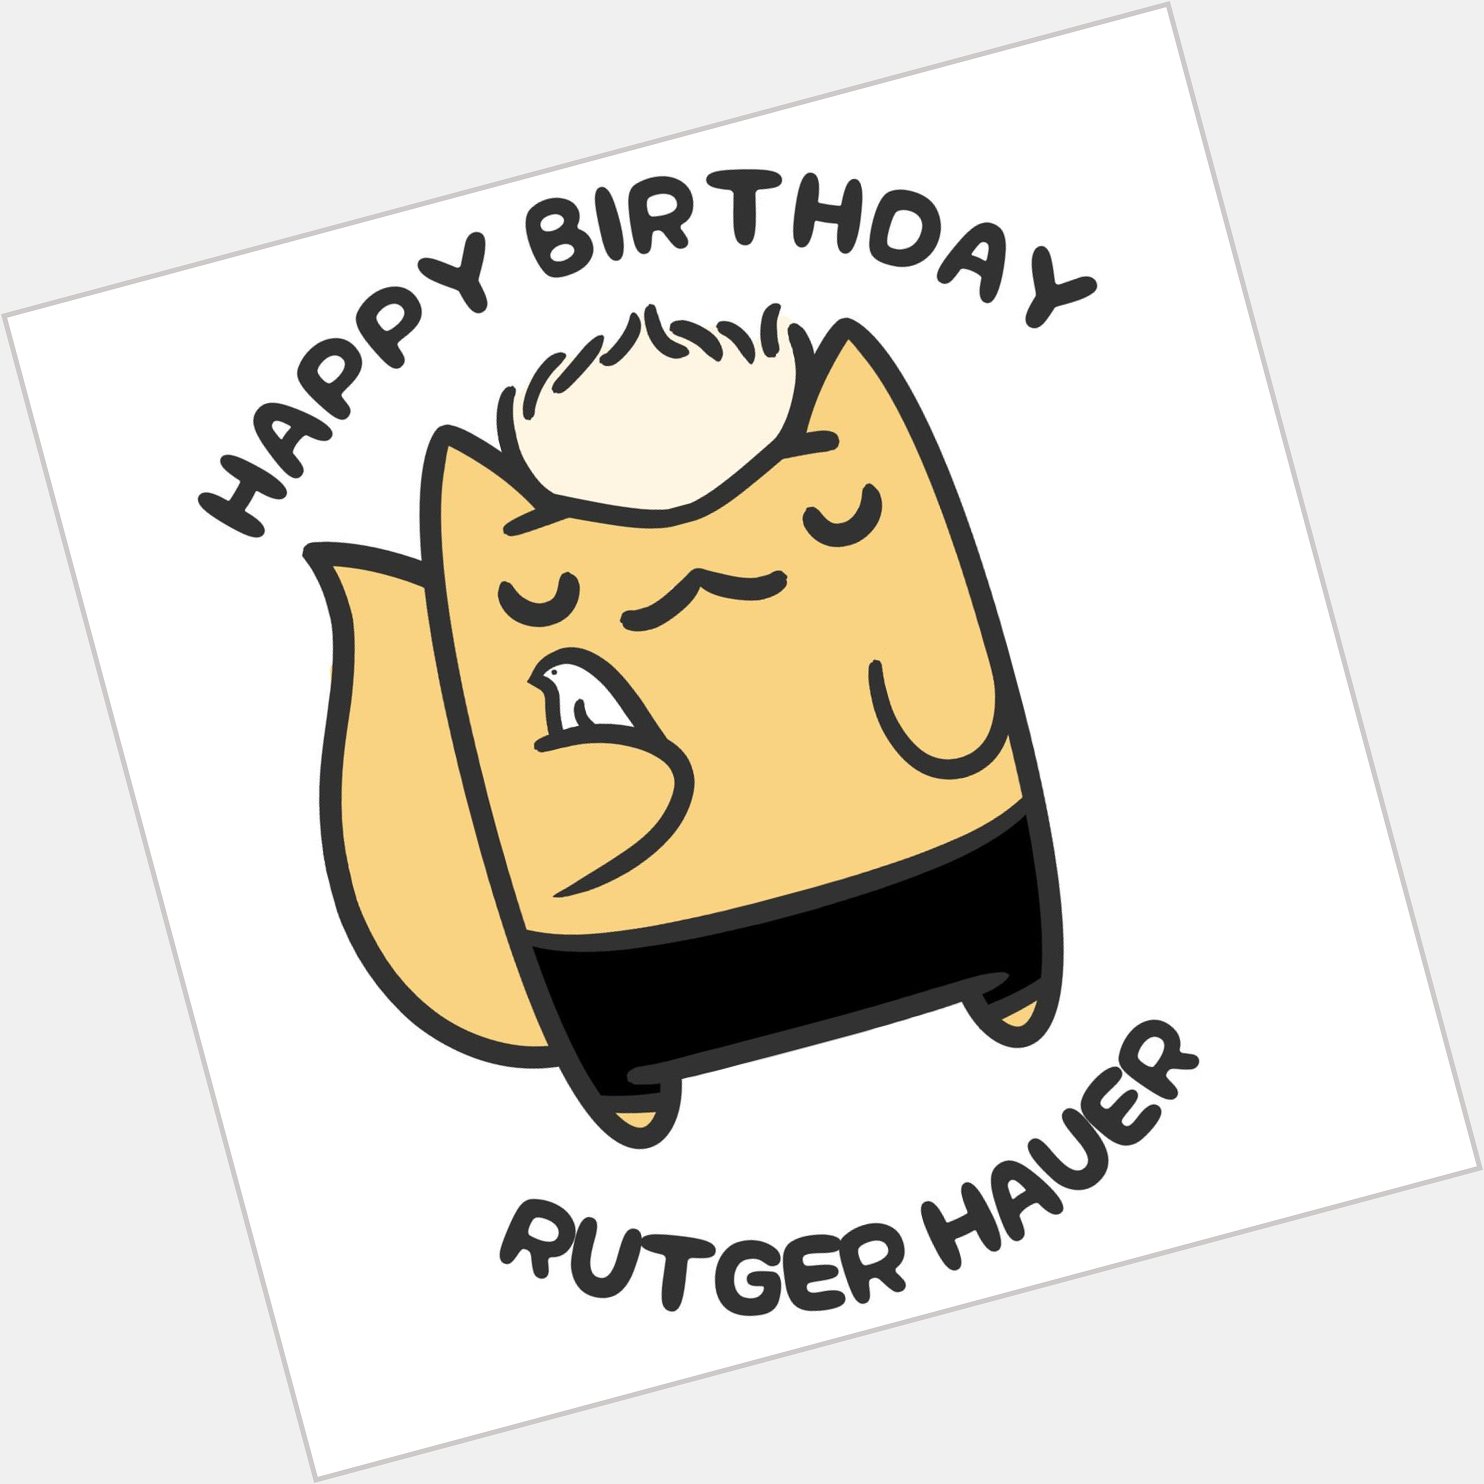 Happy Birthday, Rutger Hauer!  